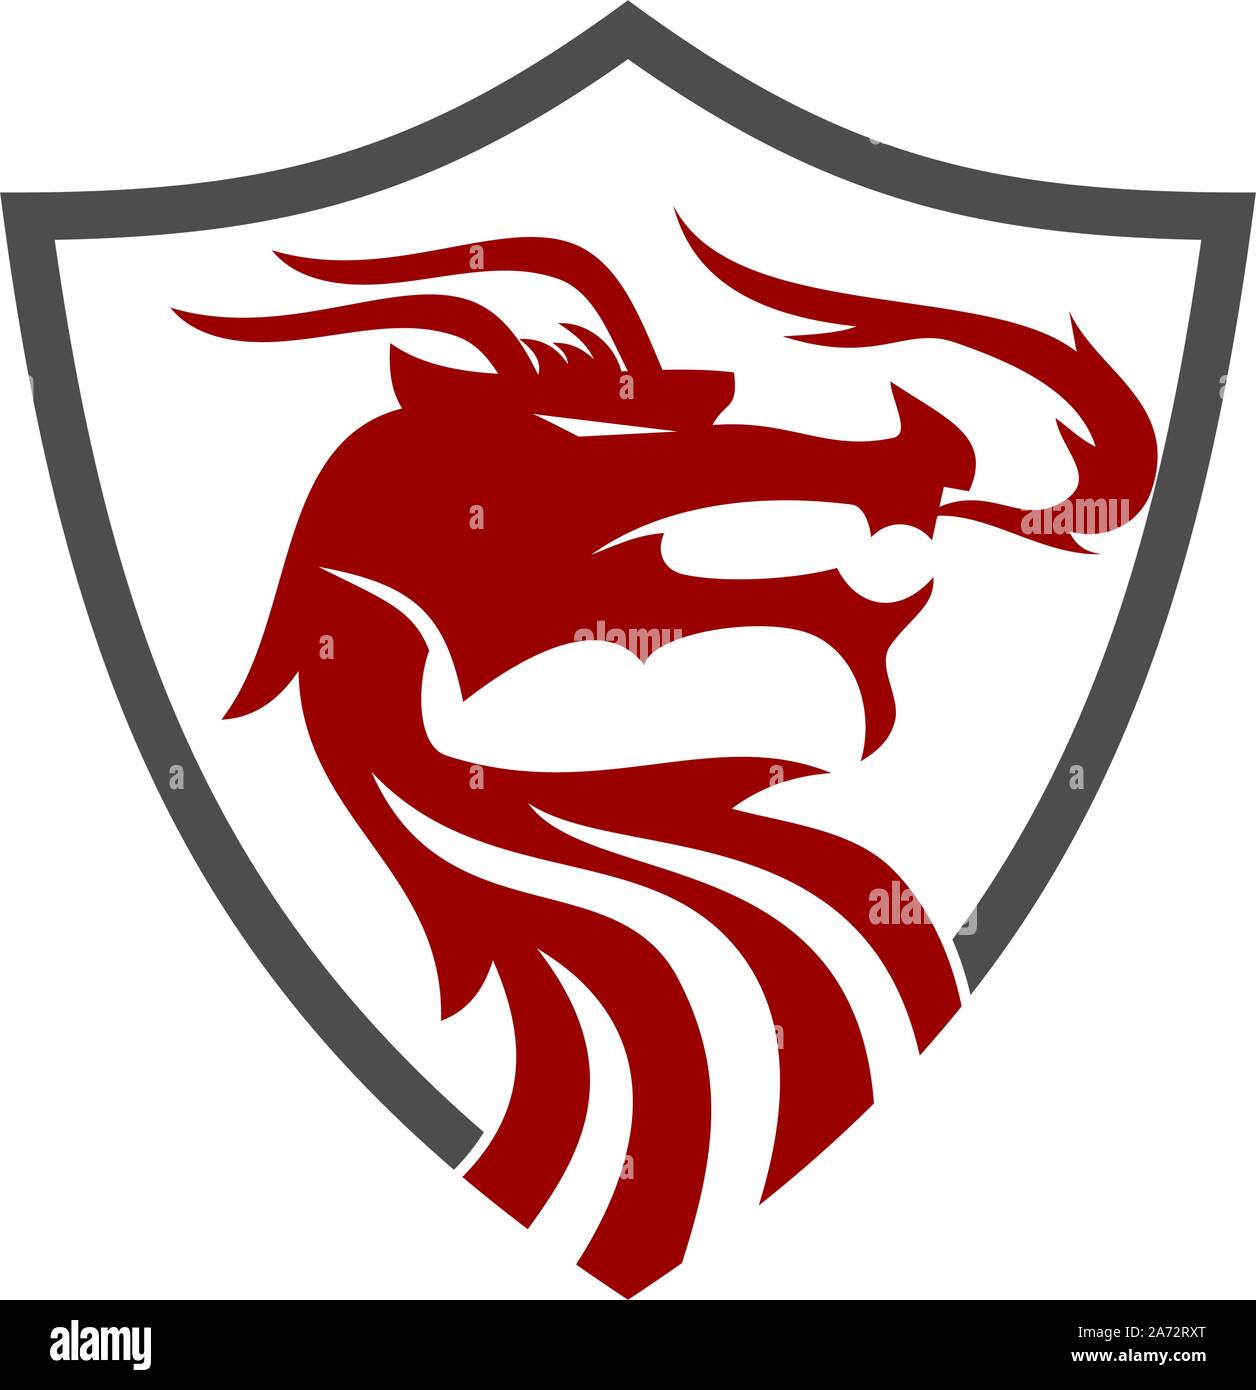 dragon e sports logo gaming mascot, flame fire Stock Vector